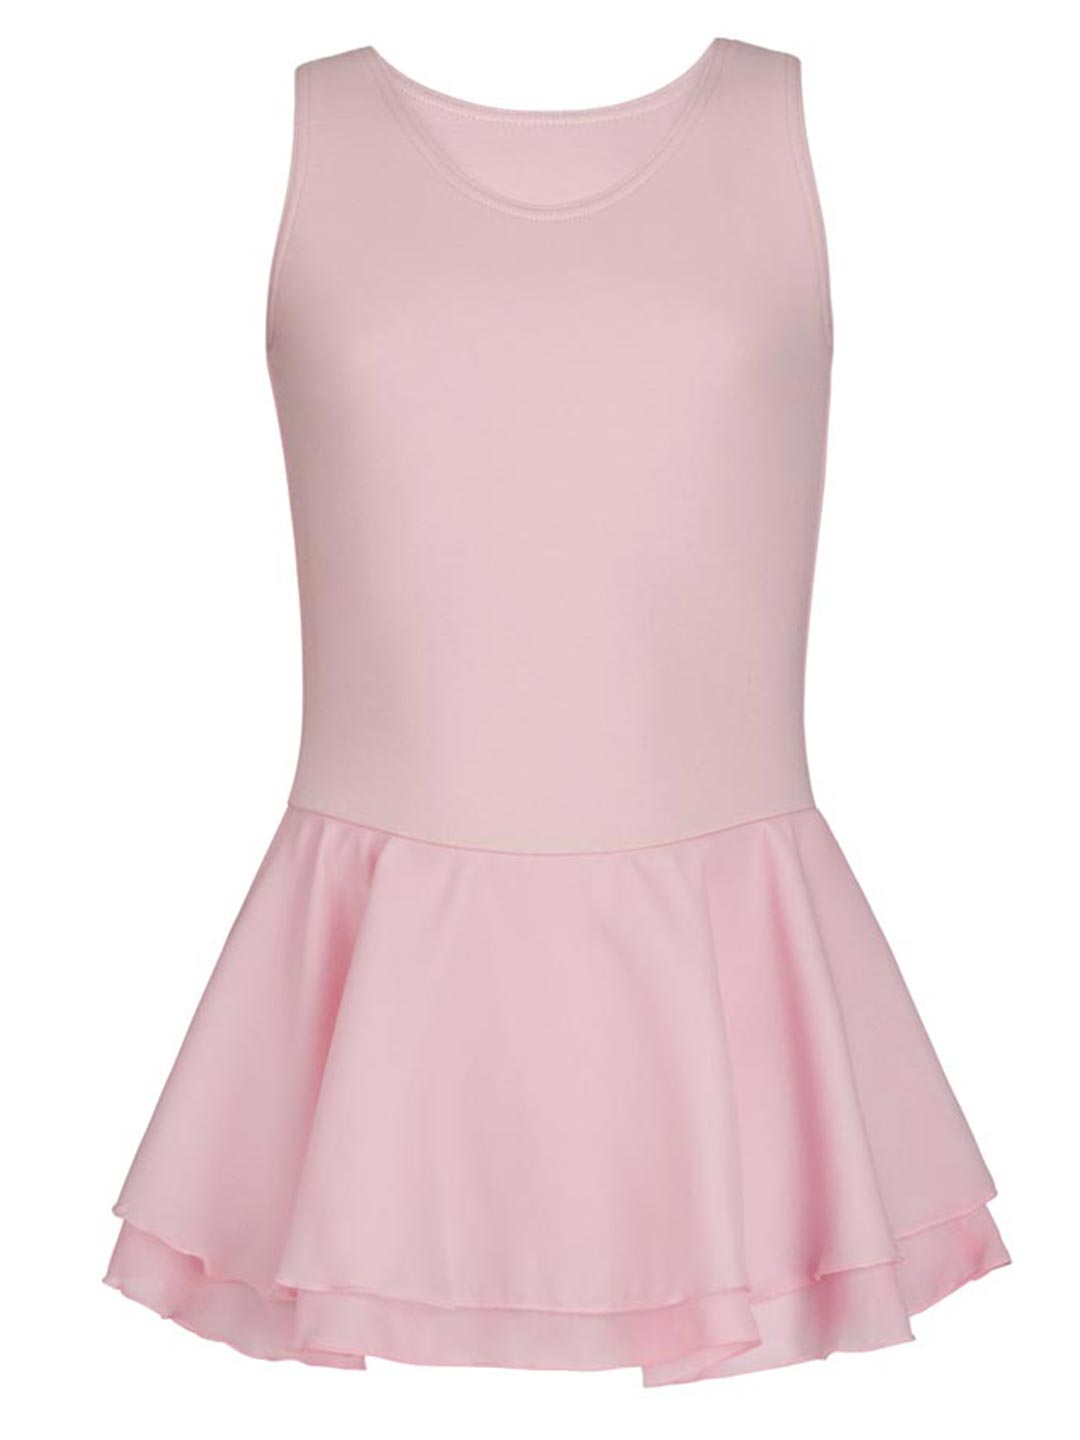 Capezio Skirt Dress (CC877C)